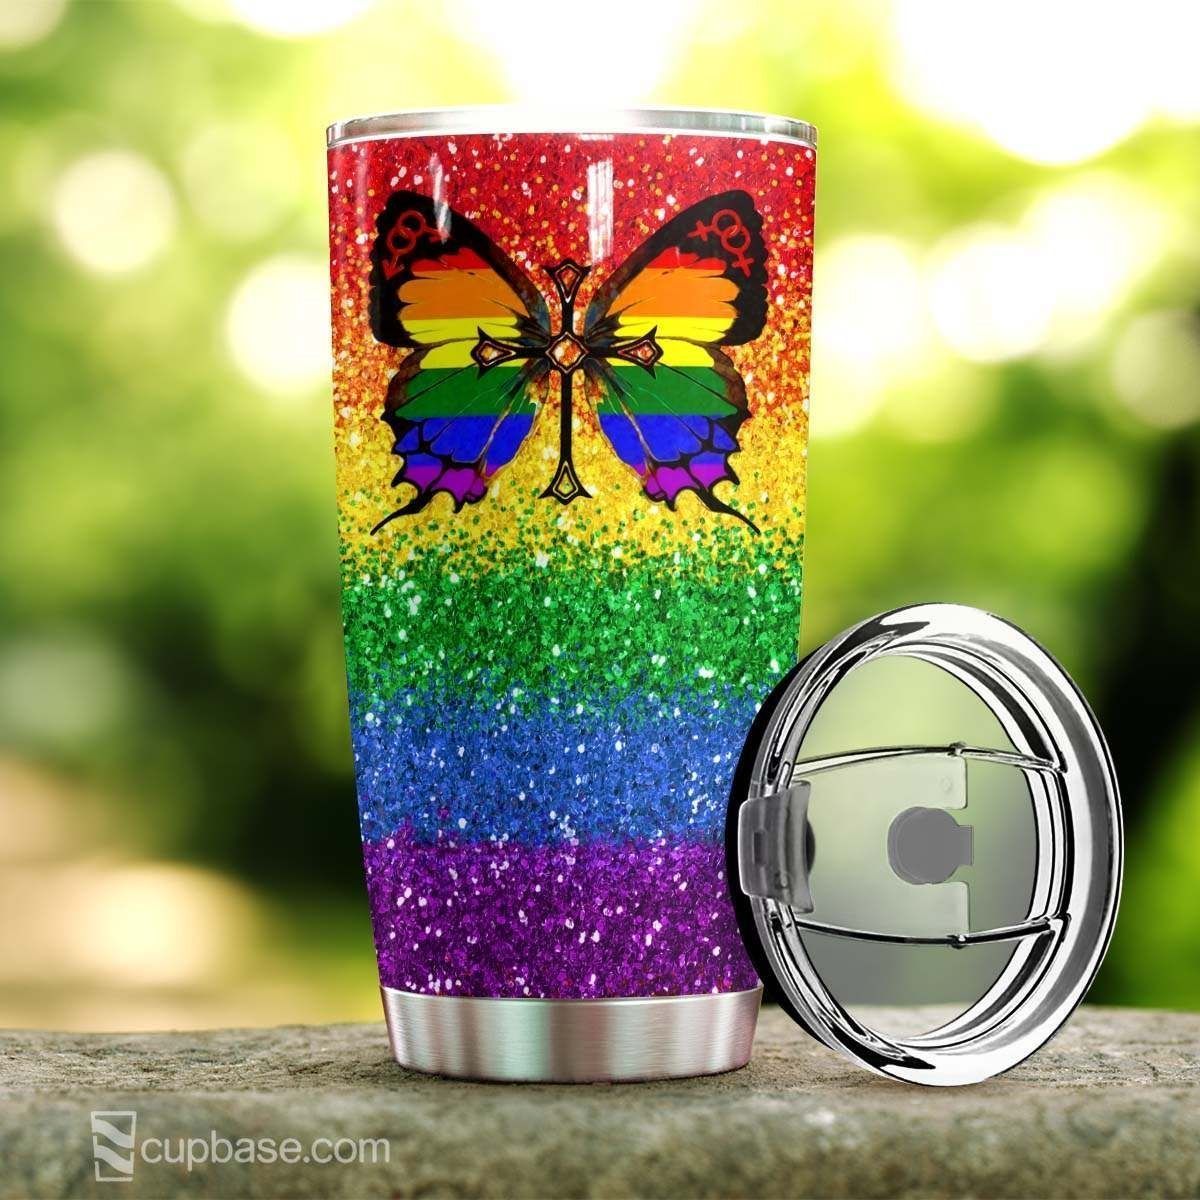 Unifinz LGBT God Tumbler 20 oz God Accept You LGBT Rainbow Butterfly Cross Tumbler Cup LGBT Travel Cup 2022